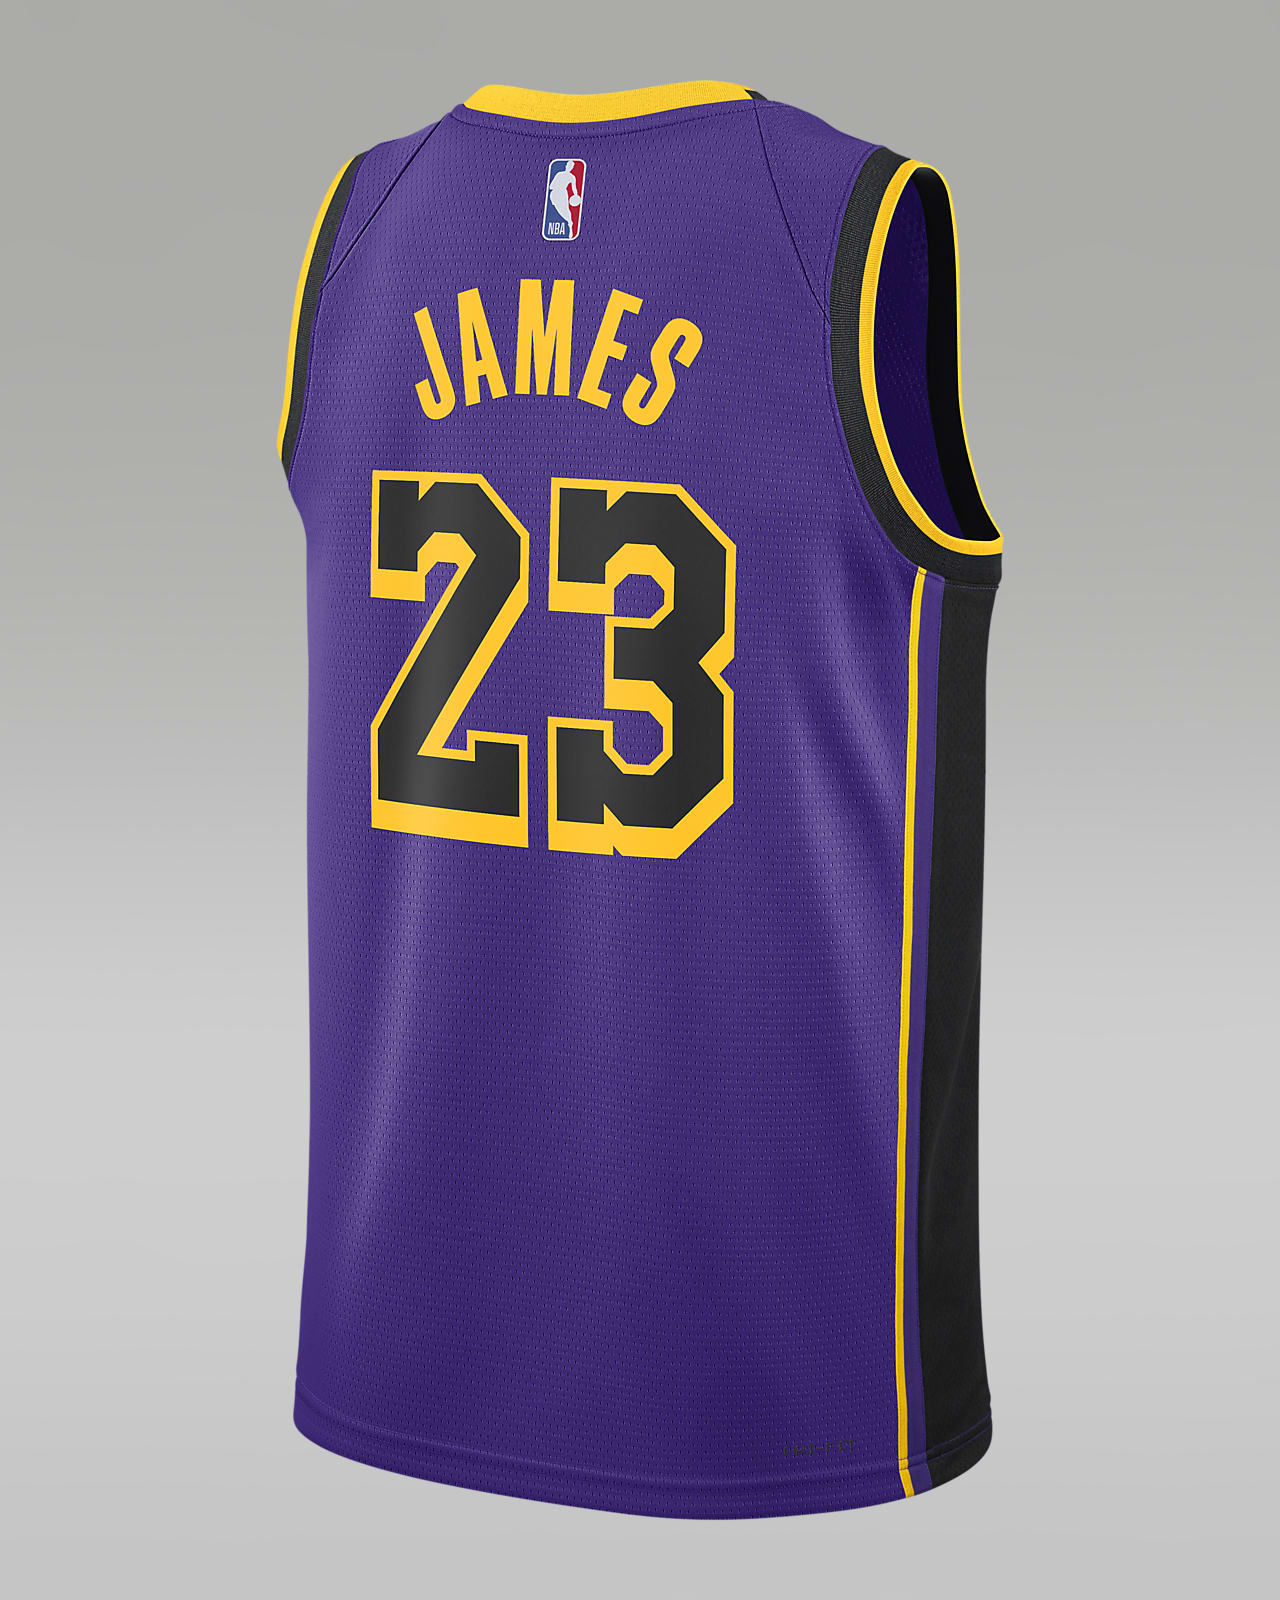 Los Angeles Lakers Statement Edition Men's Jordan Dri-FIT NBA Swingman  Jersey.